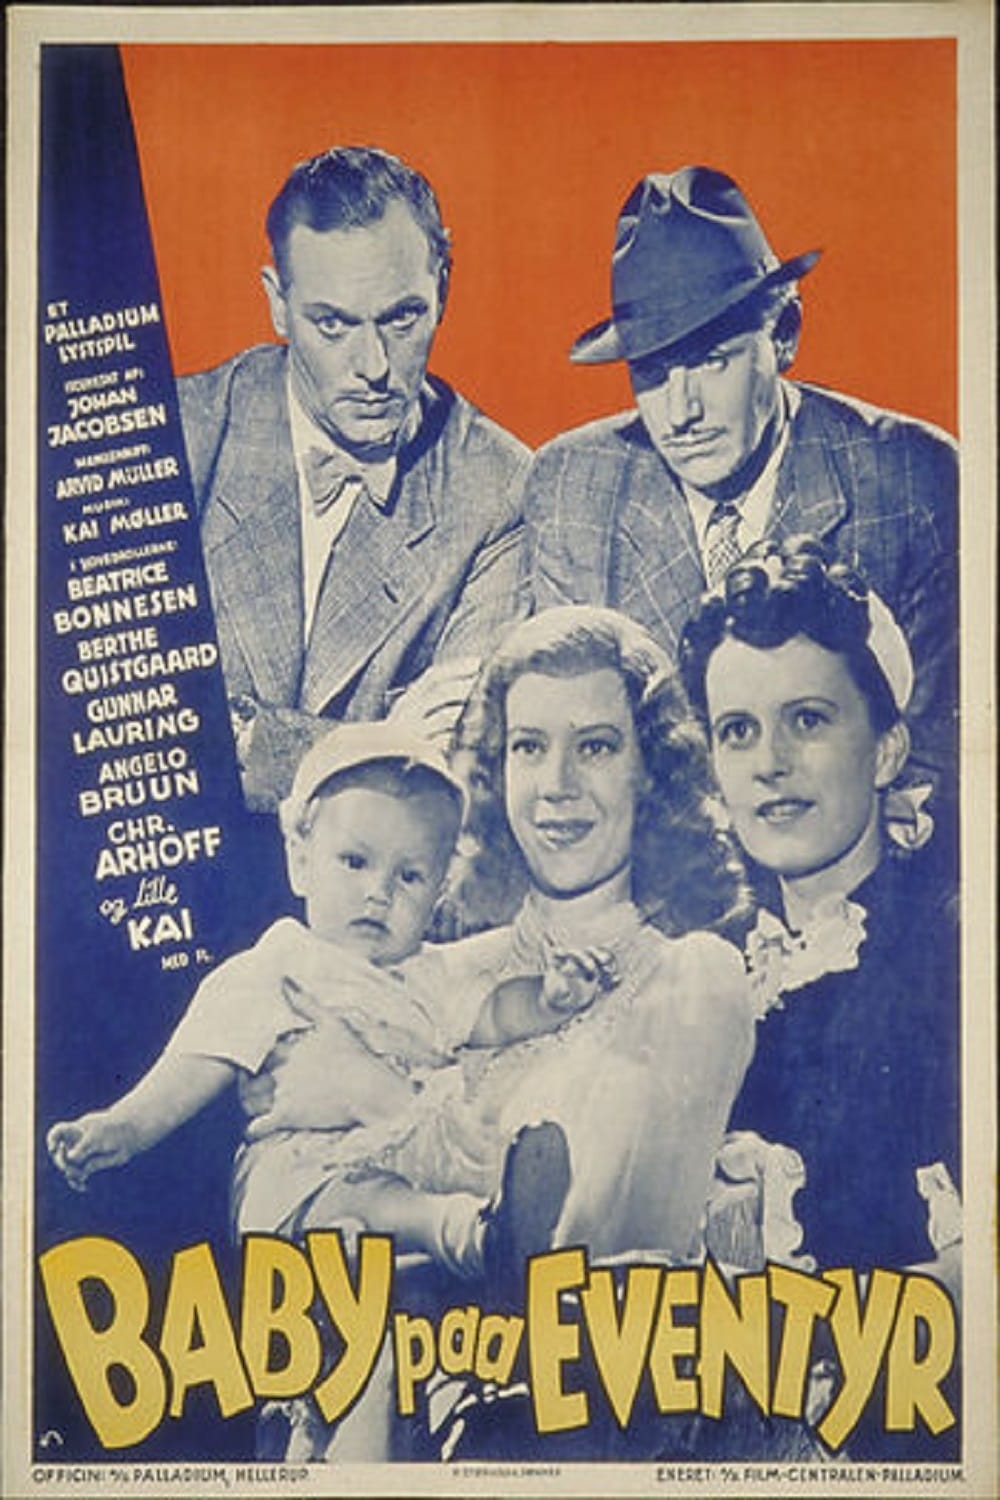 Baby paa eventyr (1942)